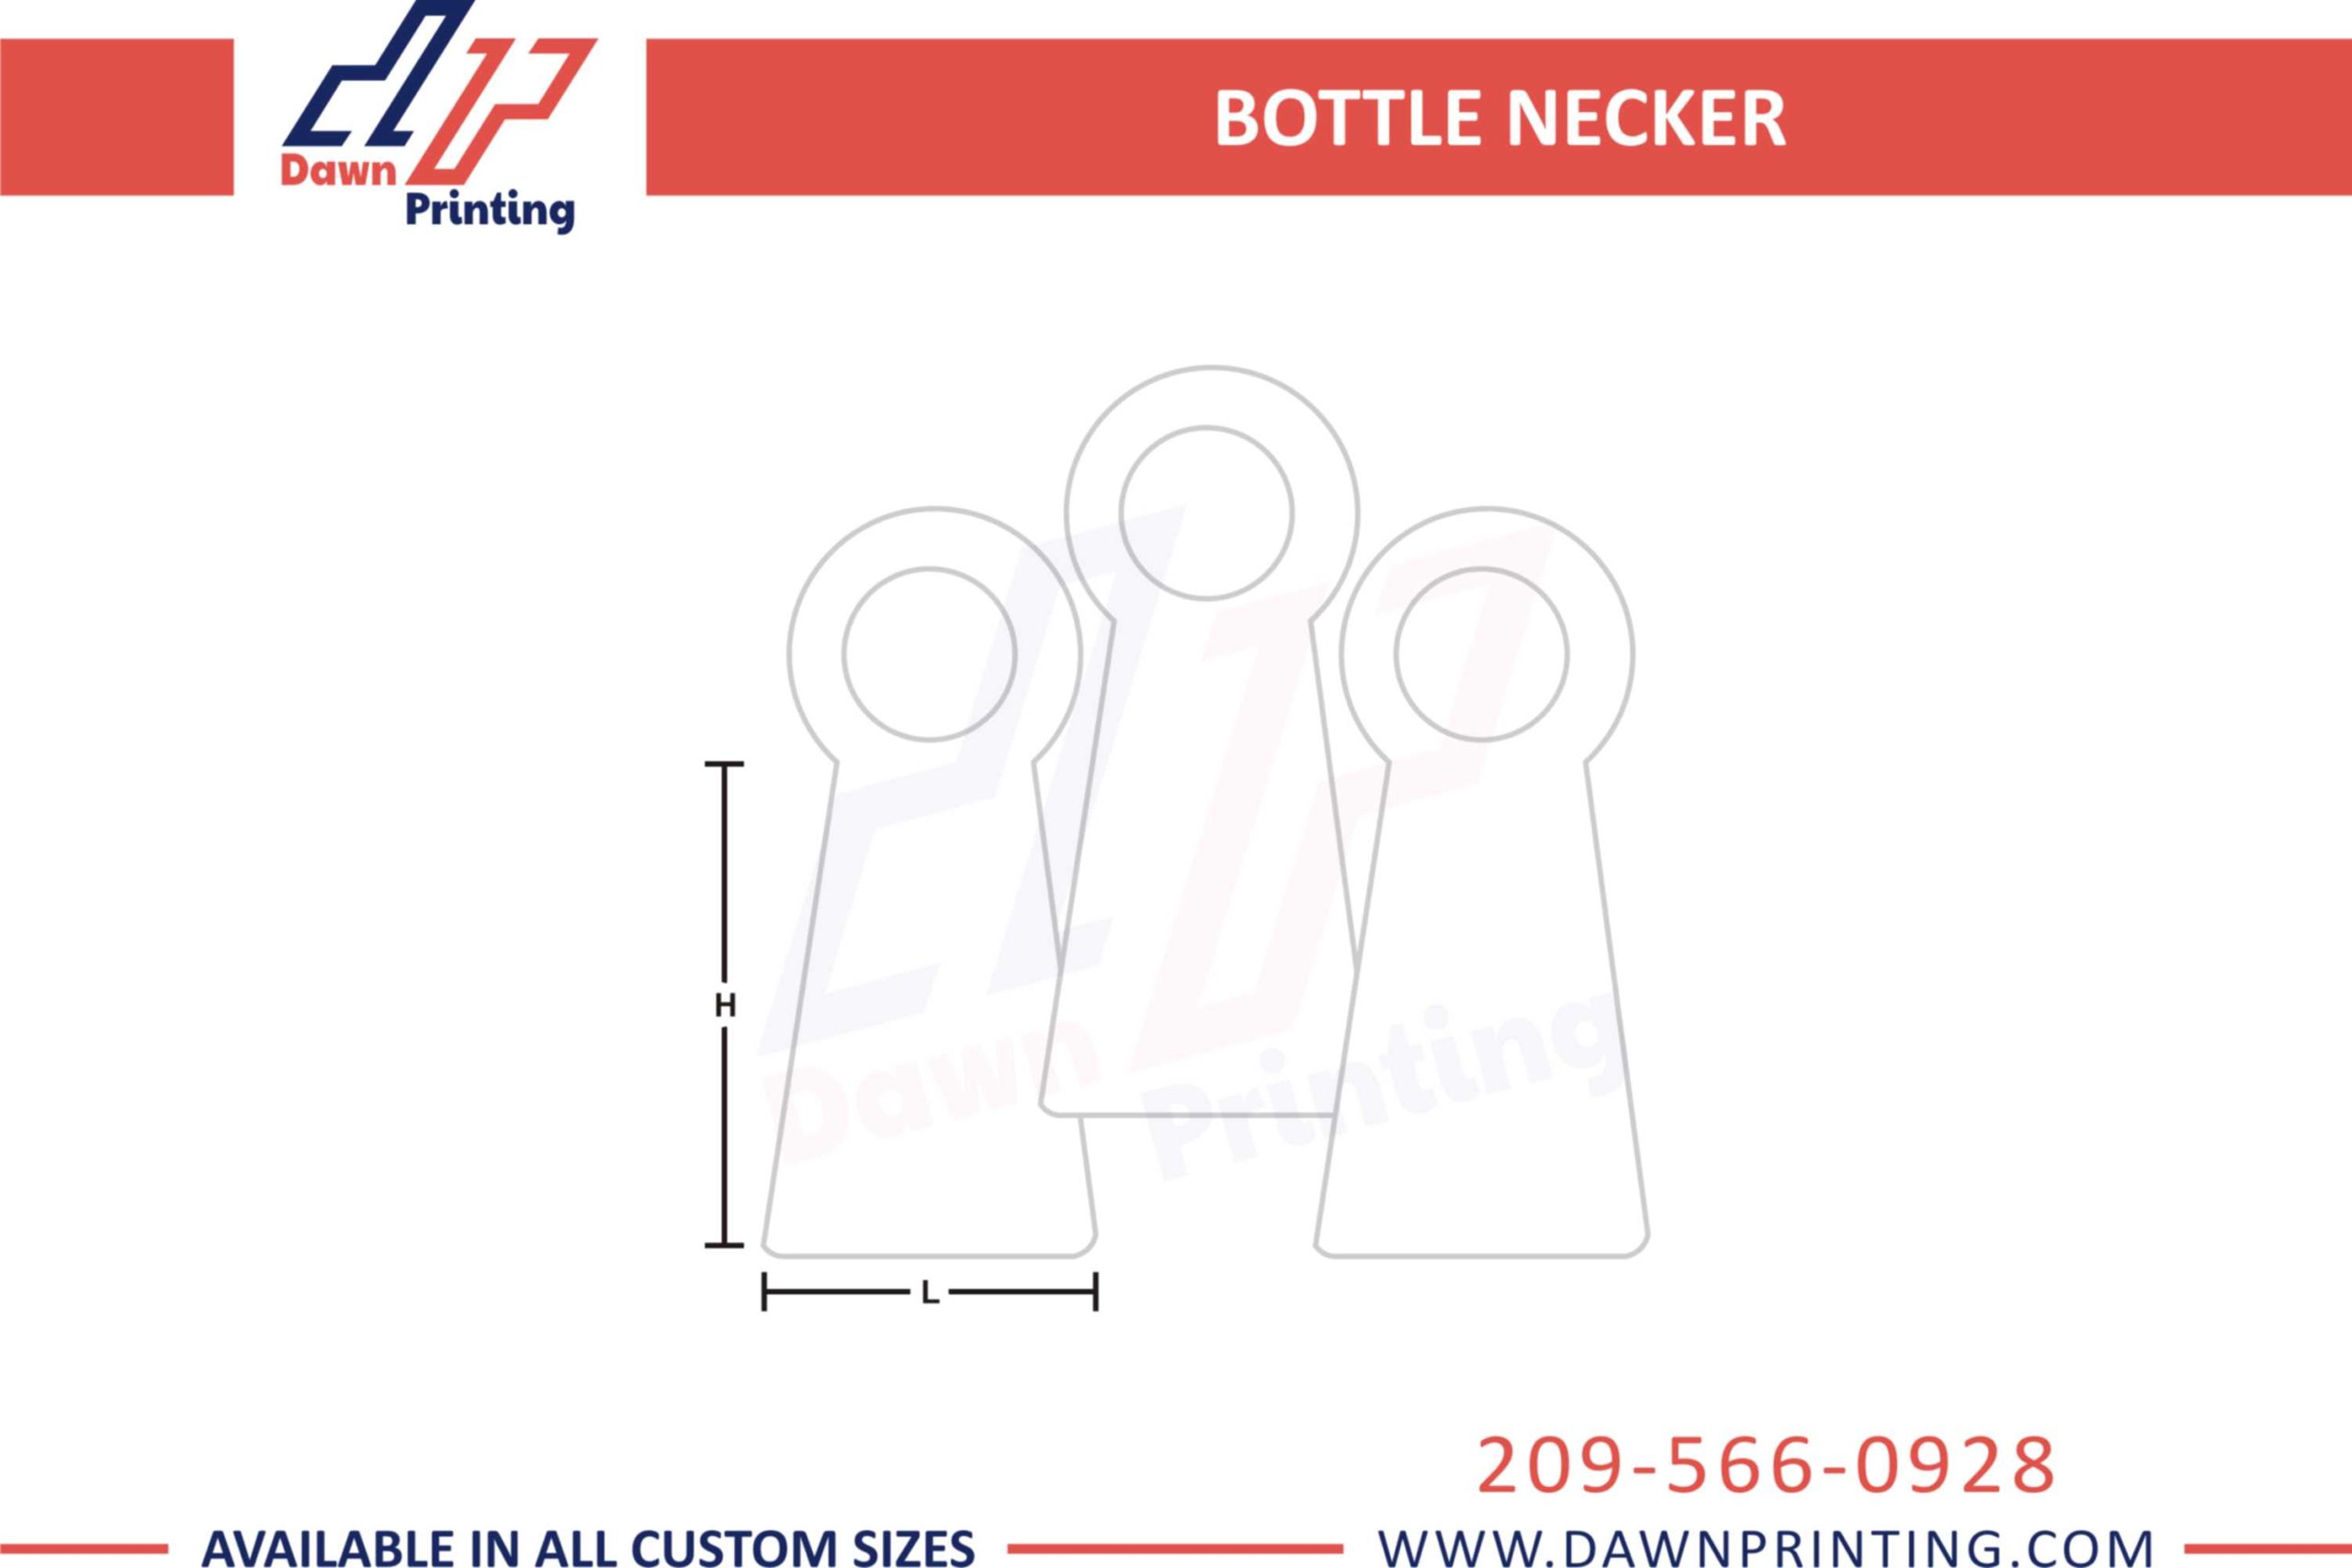 3D Bottle Necker - Dawn Printing